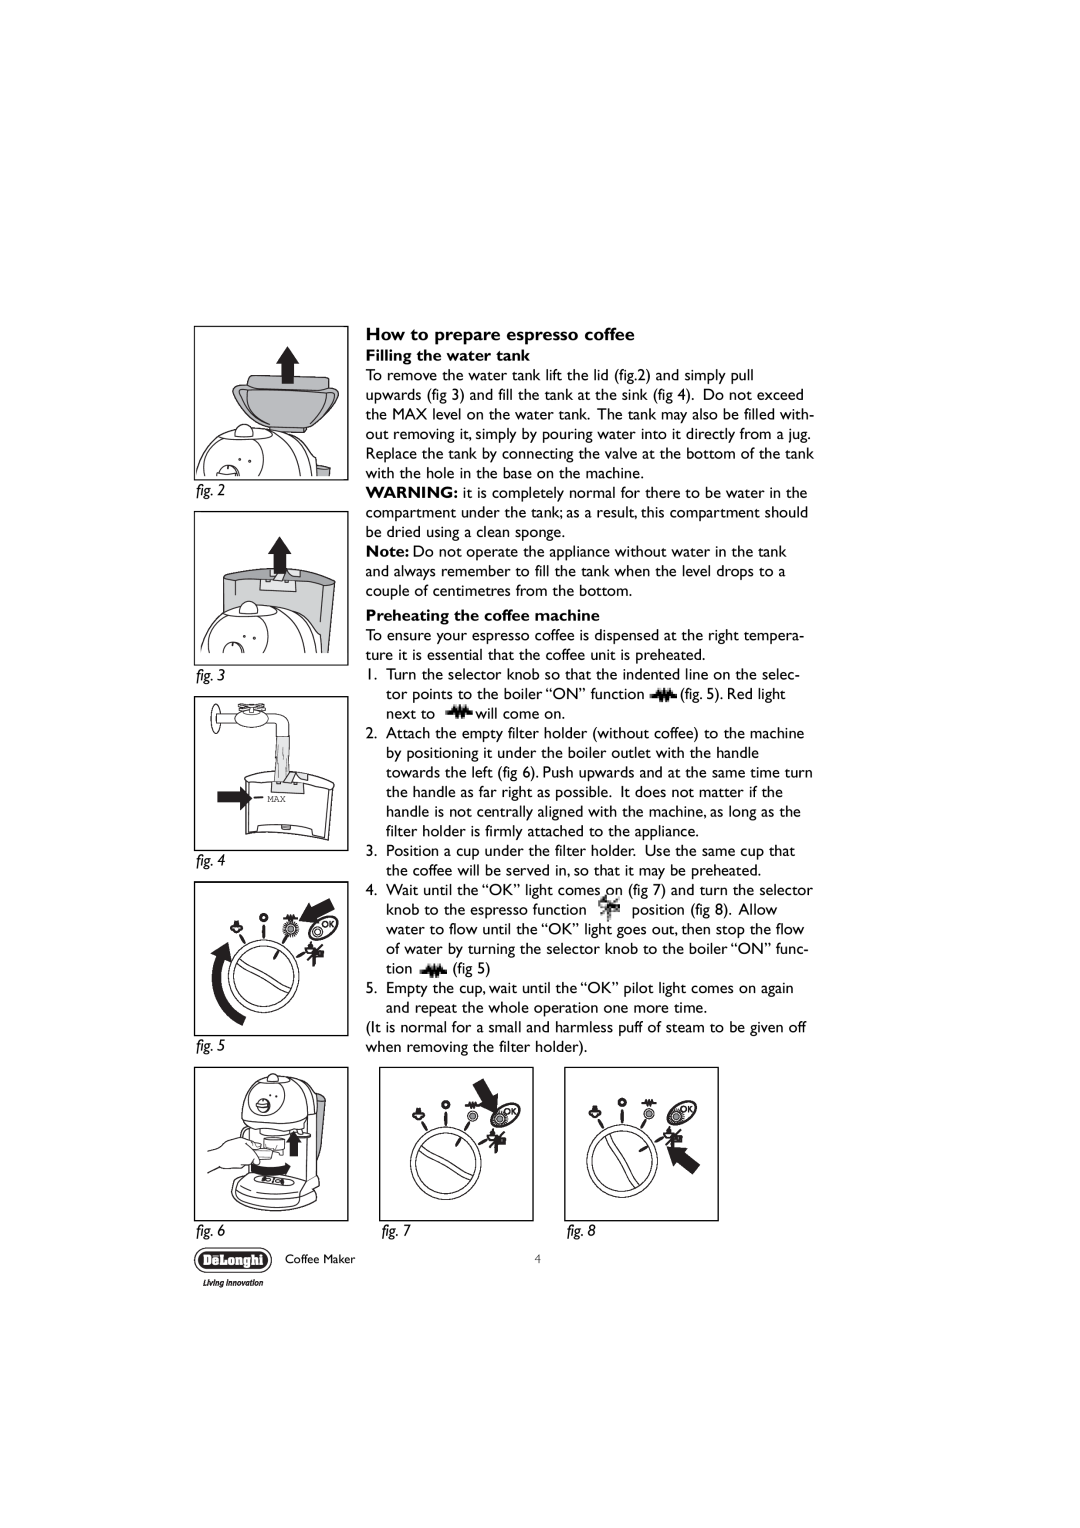 DeLonghi EC190 manual How to prepare espresso coffee, Filling the water tank, Preheating the coffee machine 